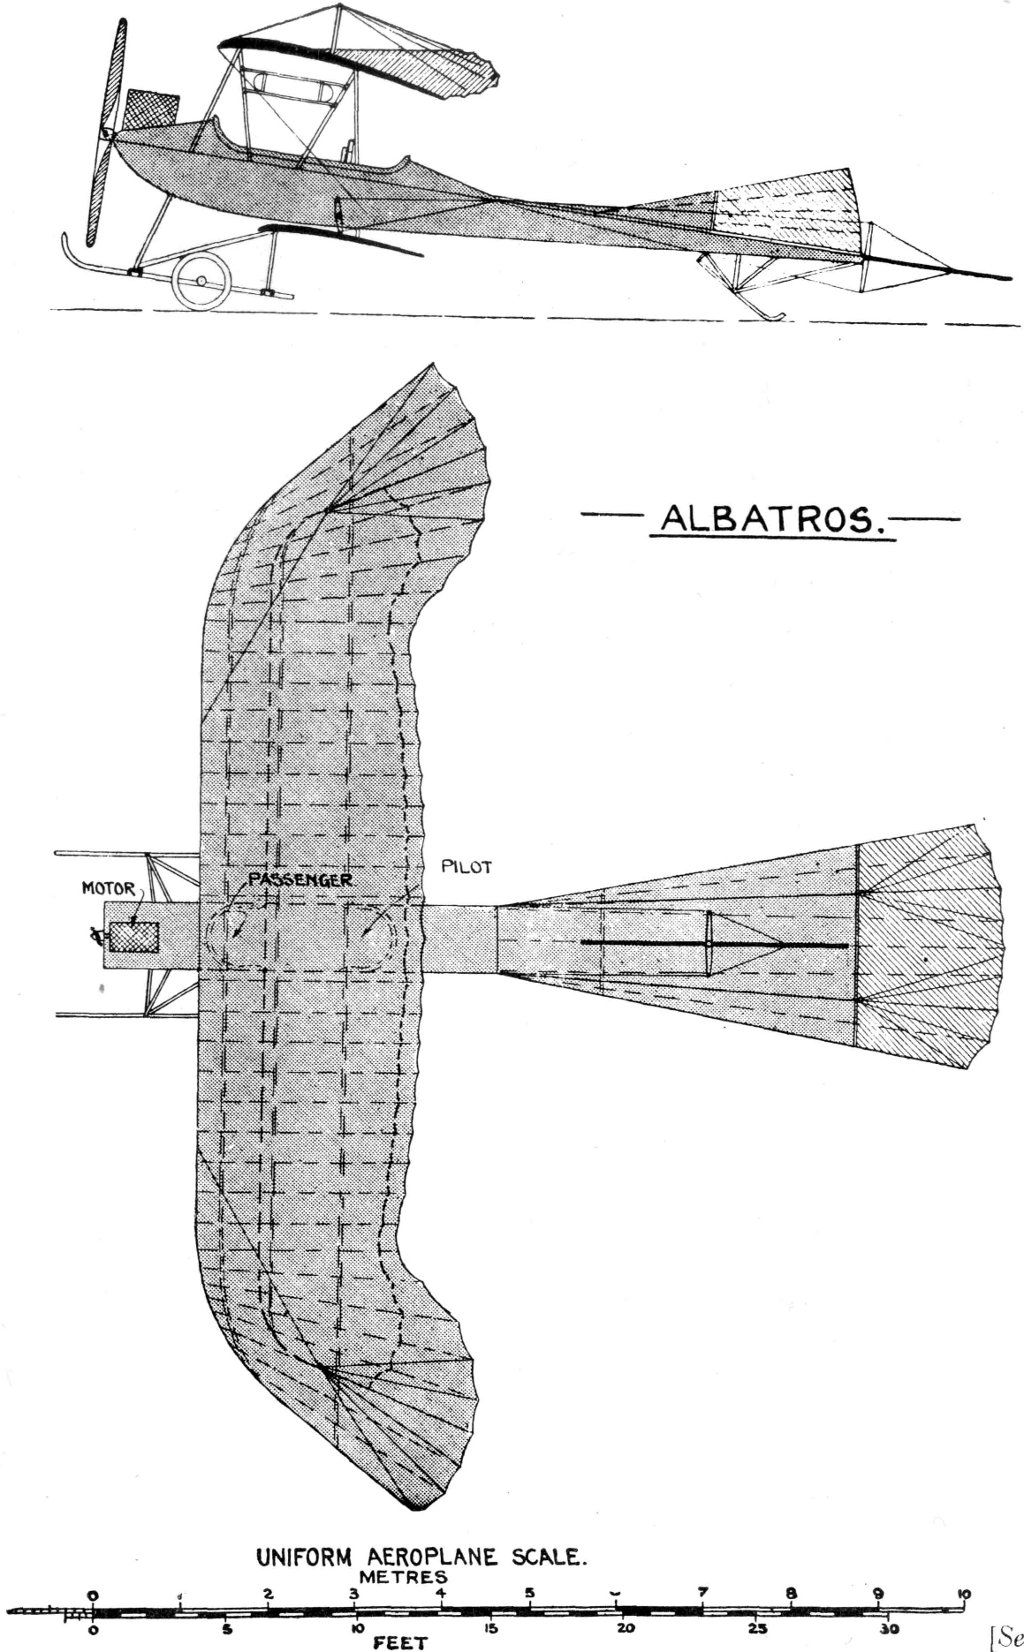 ALBATROS. Uniform Aeroplane Scale